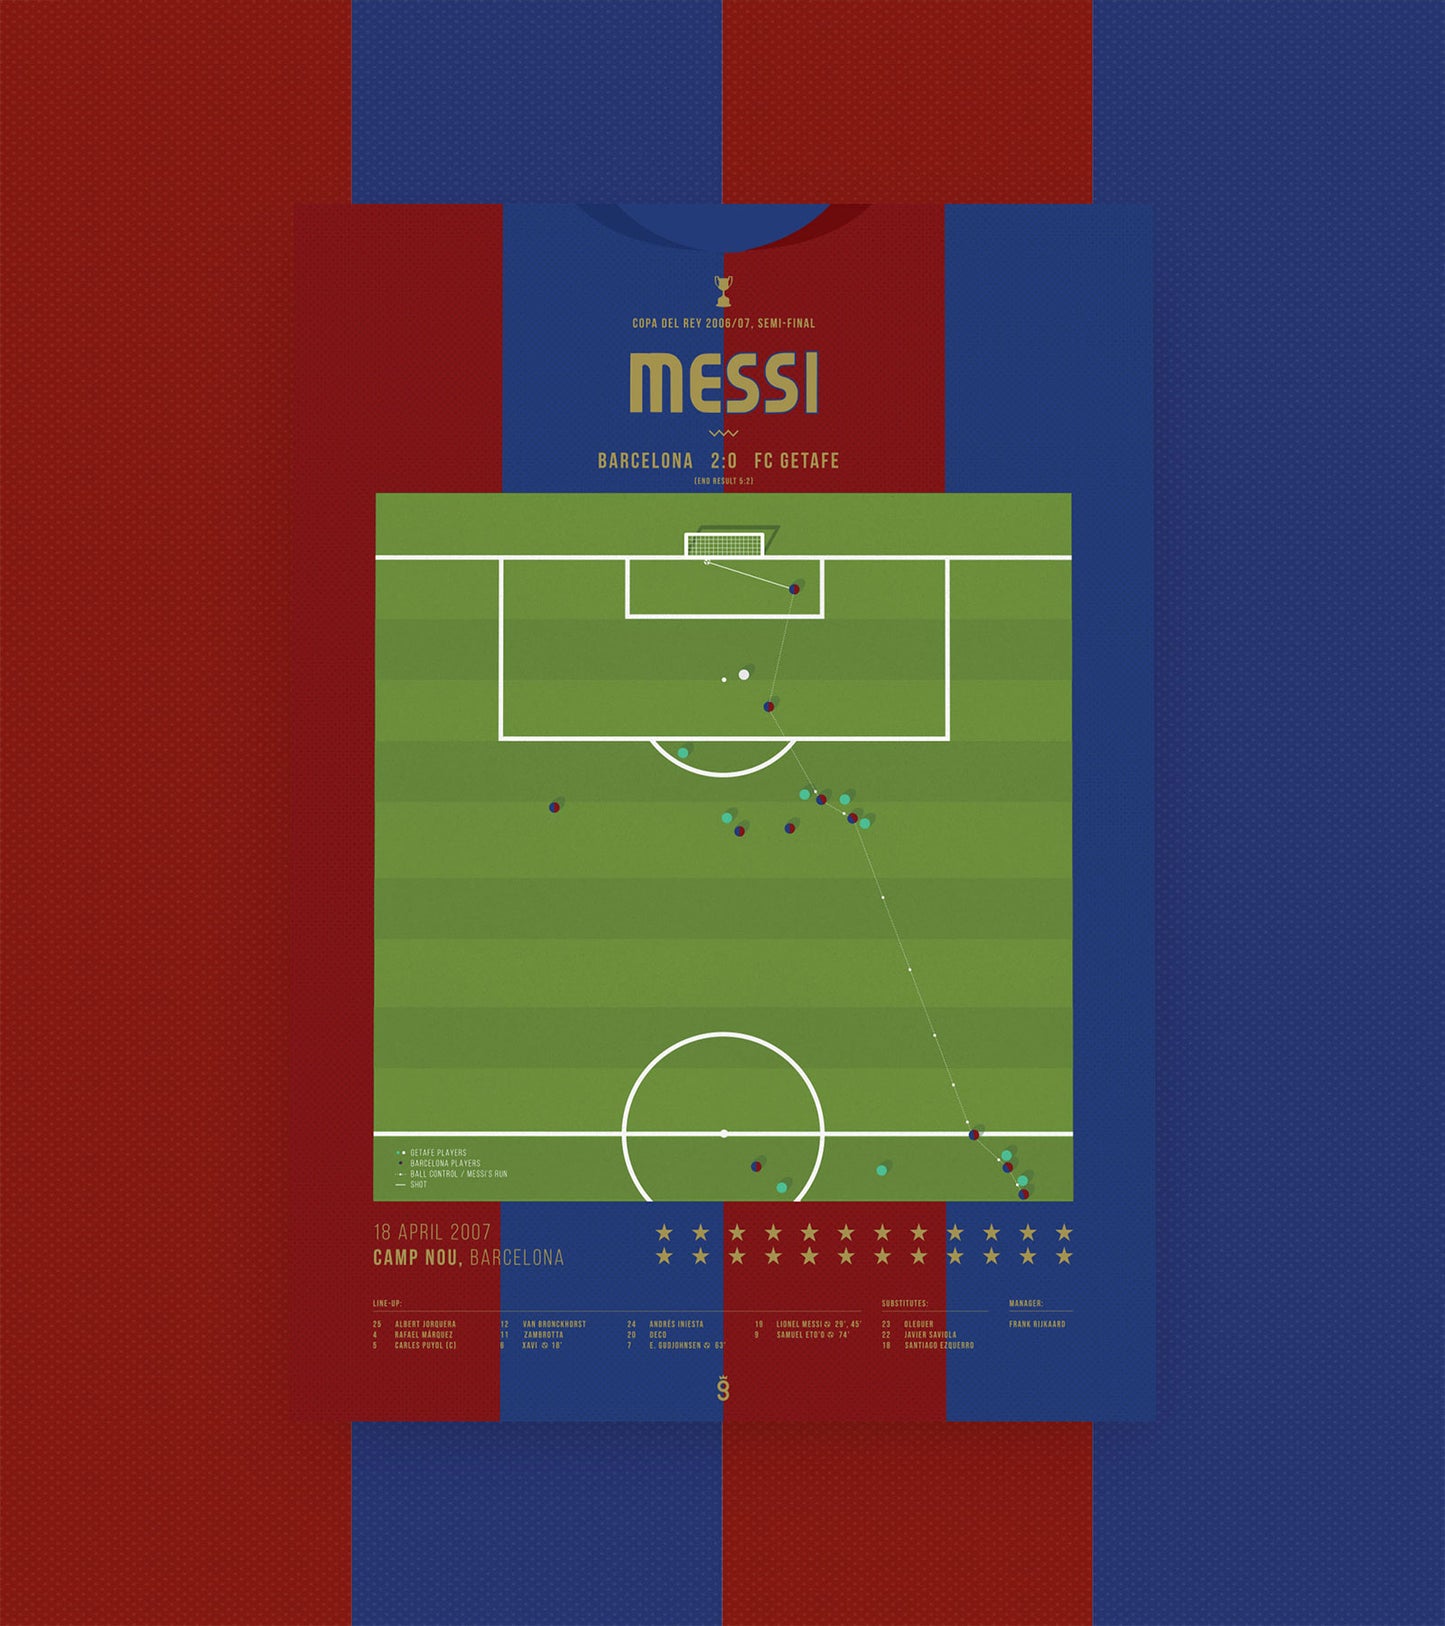 Messi scores Maradona's goal